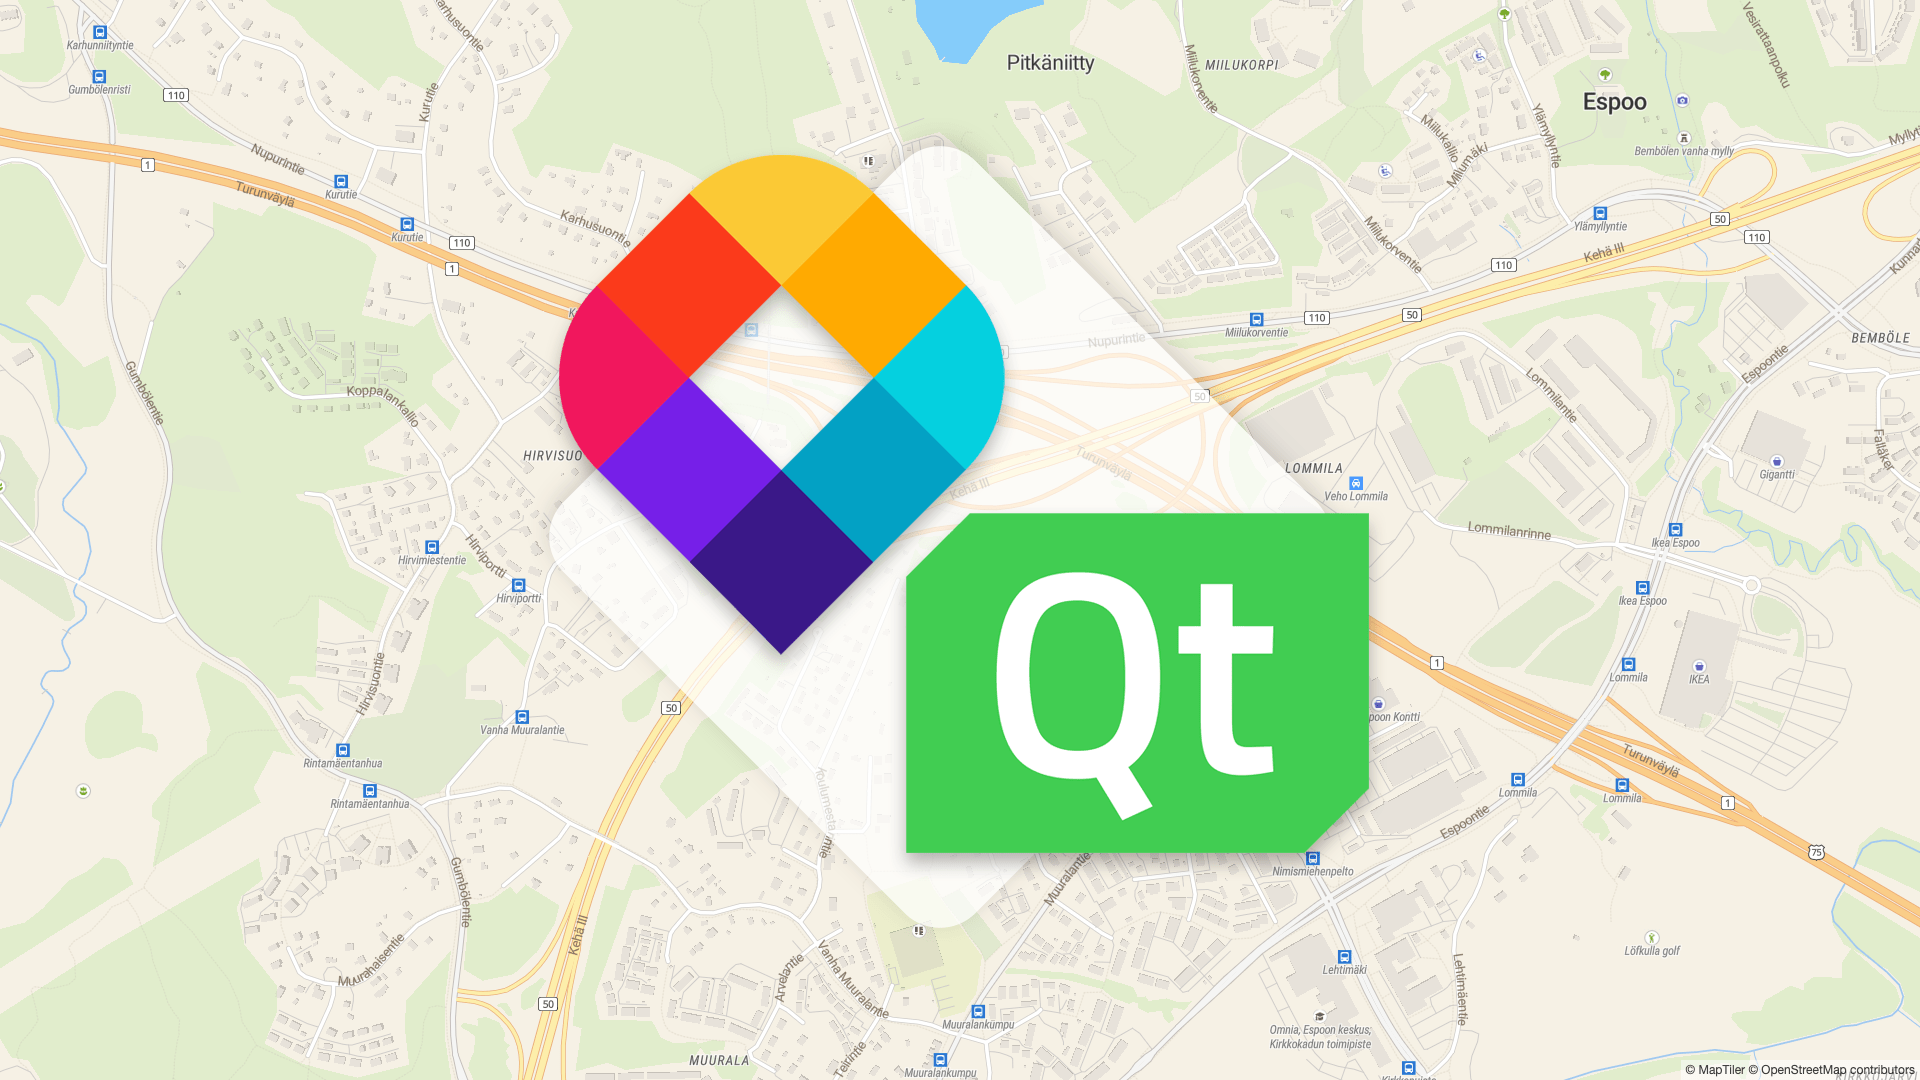 Using MapTiler maps inside Qt image